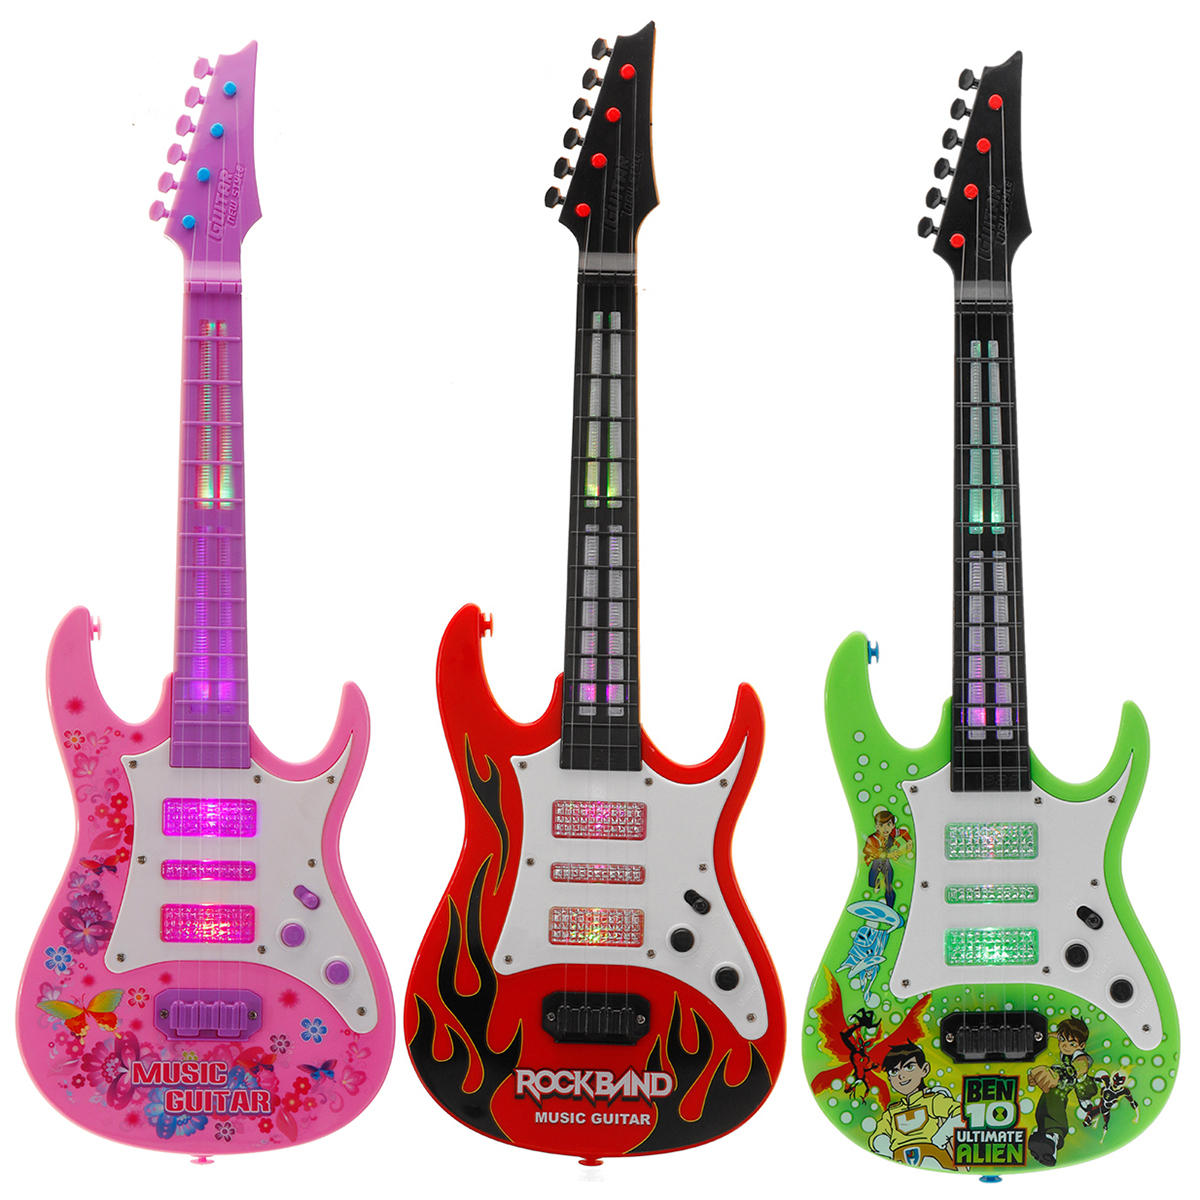 4 String Music Electric Guitar Children's Musical Instrument Children's Toy